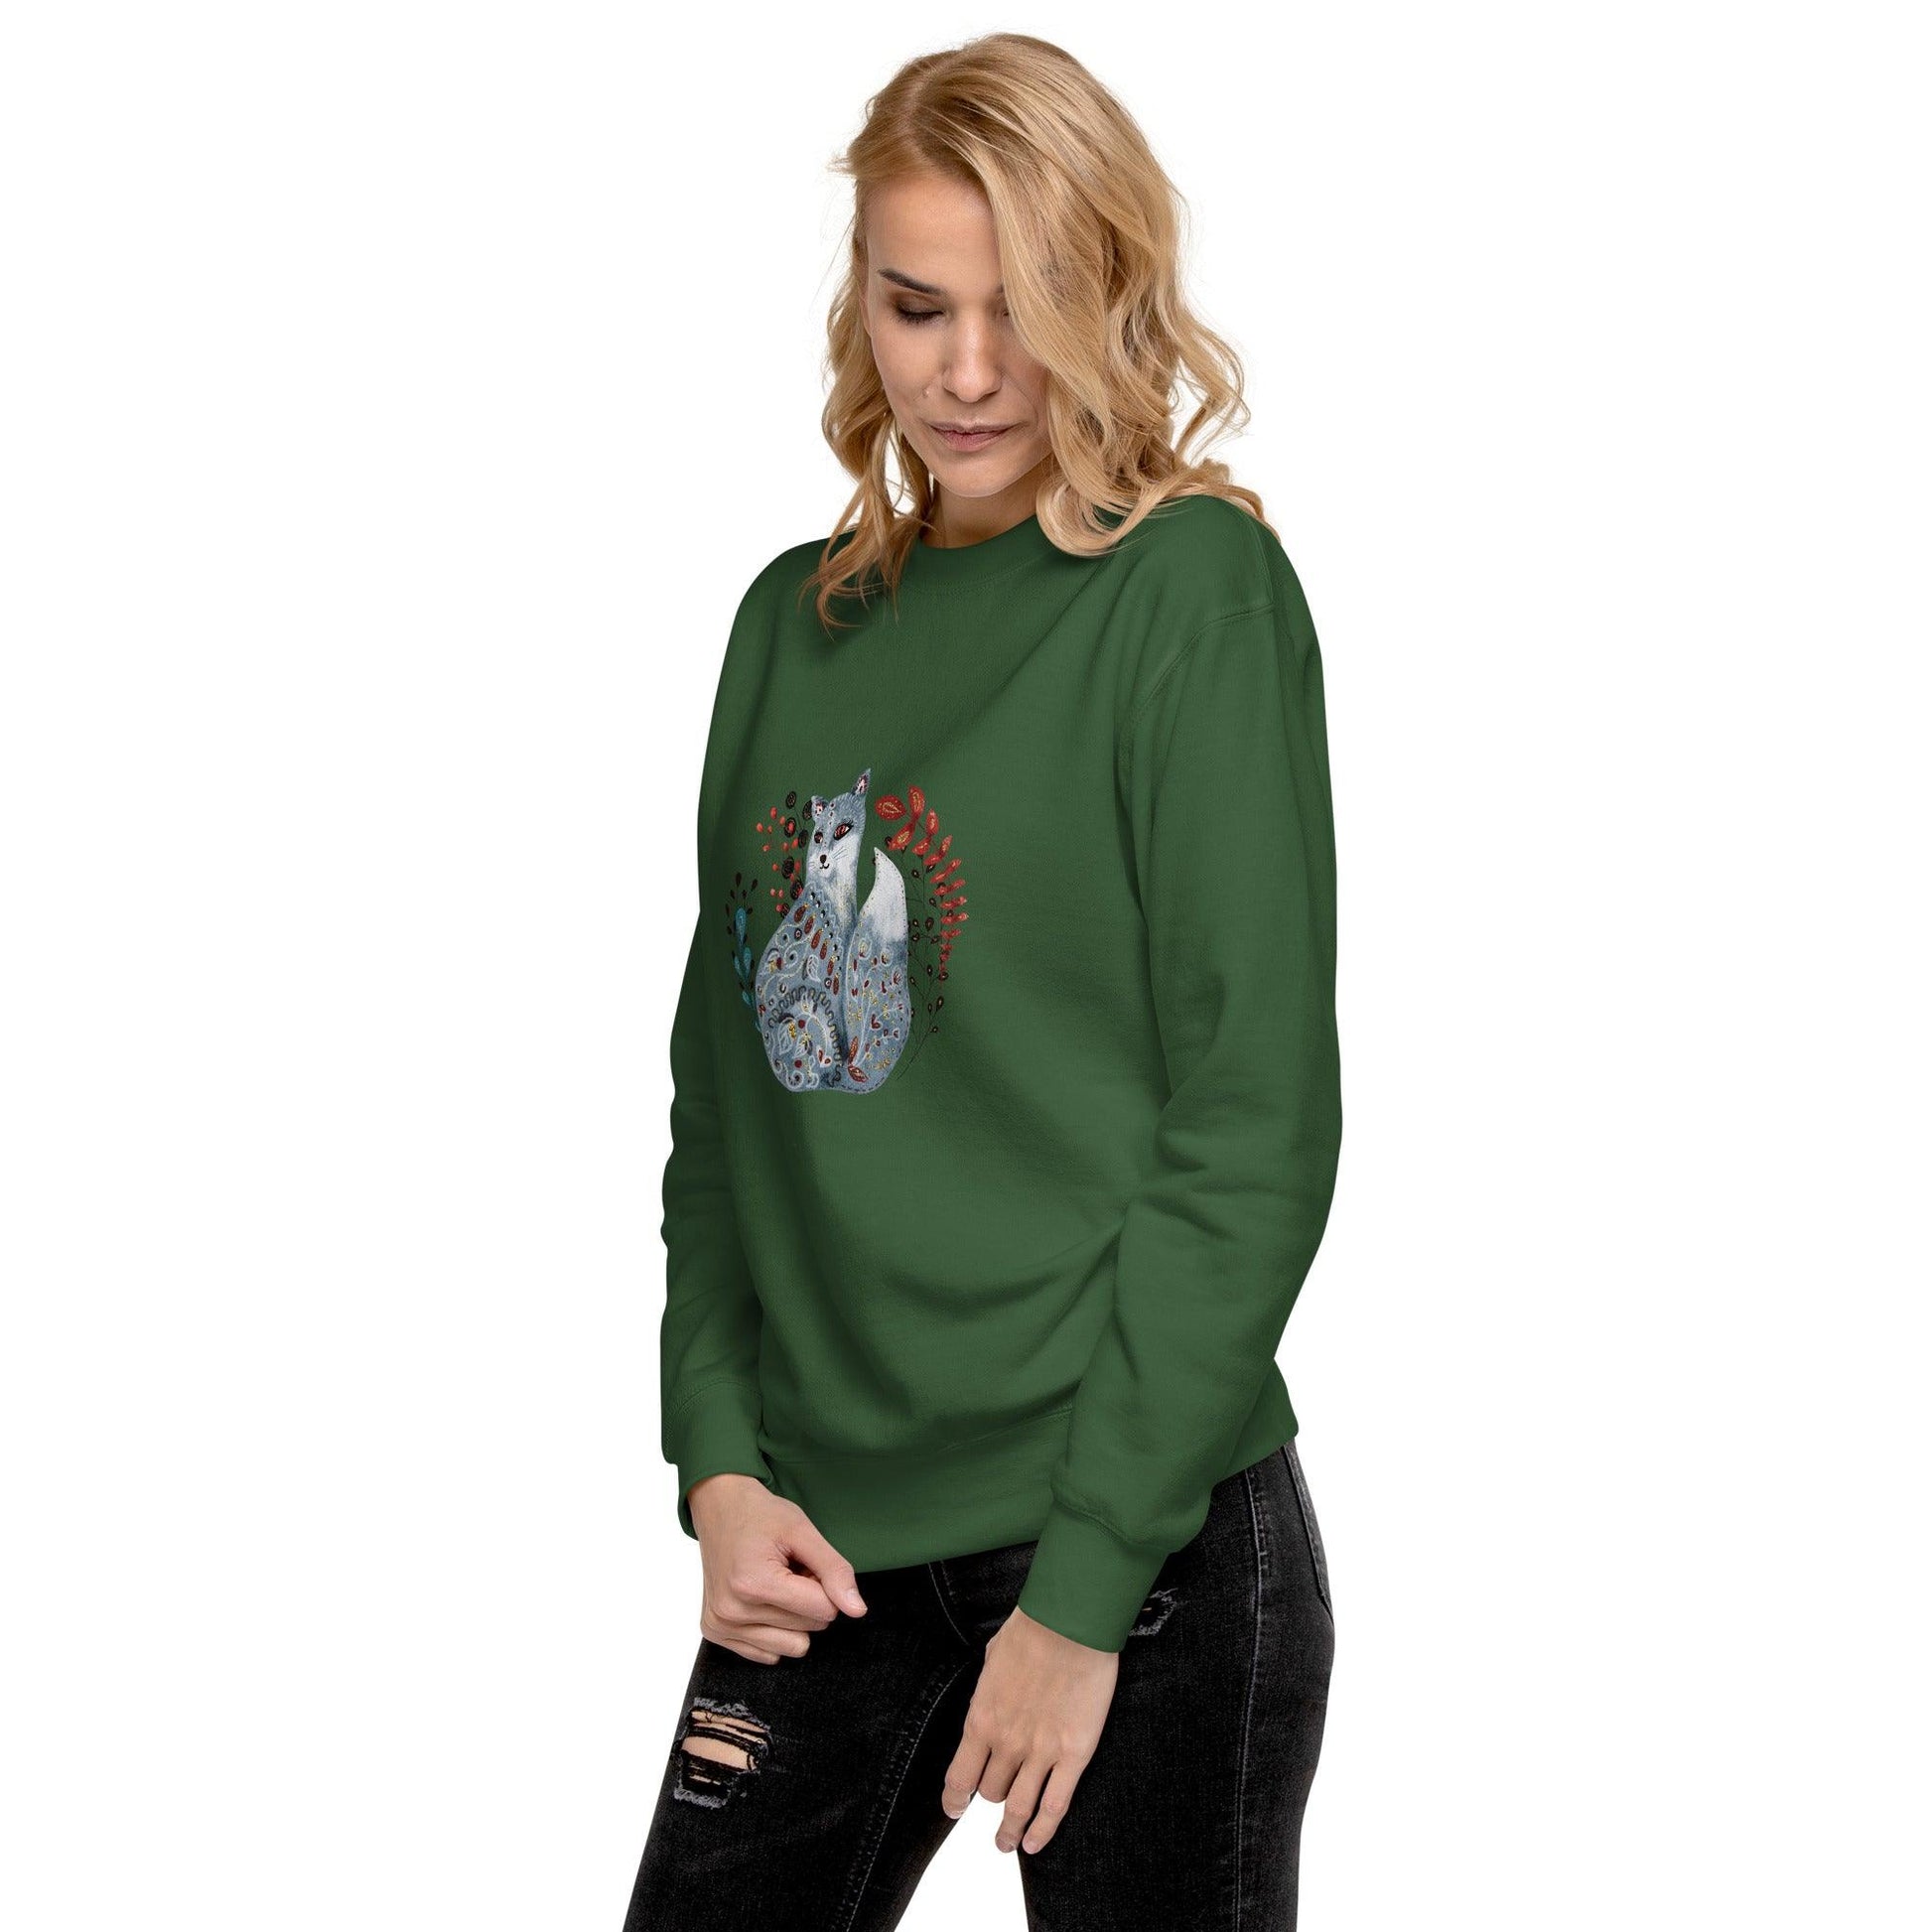 Nordic Winter Sweatshirt - Fox - The Global Wanderer